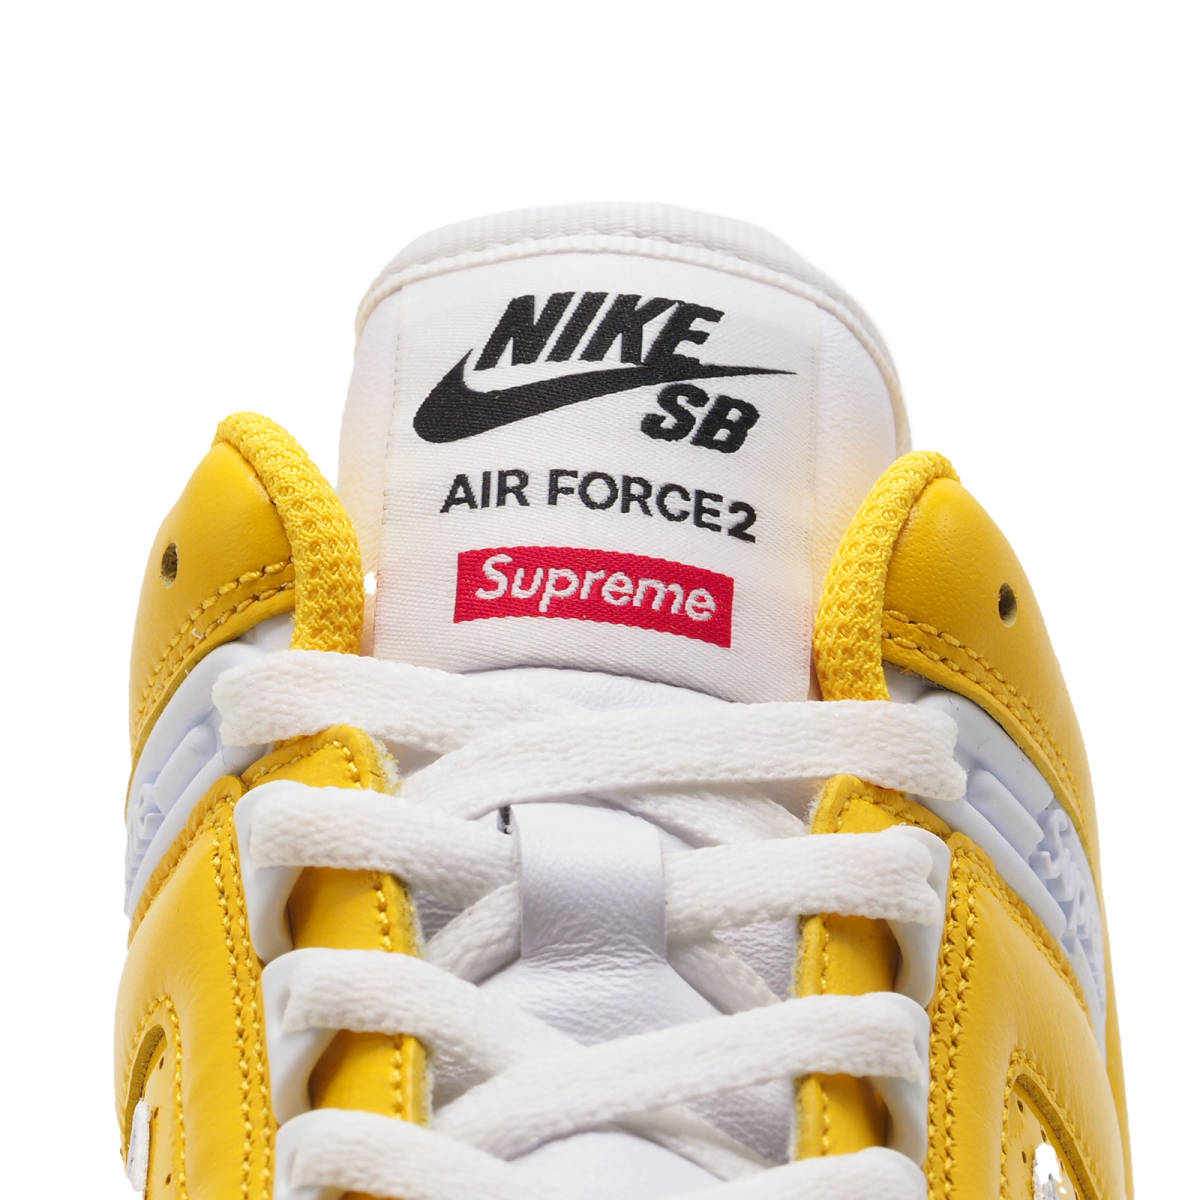 Supreme/Nike SB Air Force 2 黄色US 10 (28.0cm) シュプリーム/ナイキ エスビー エアー フォース ツー 2017FW_画像4